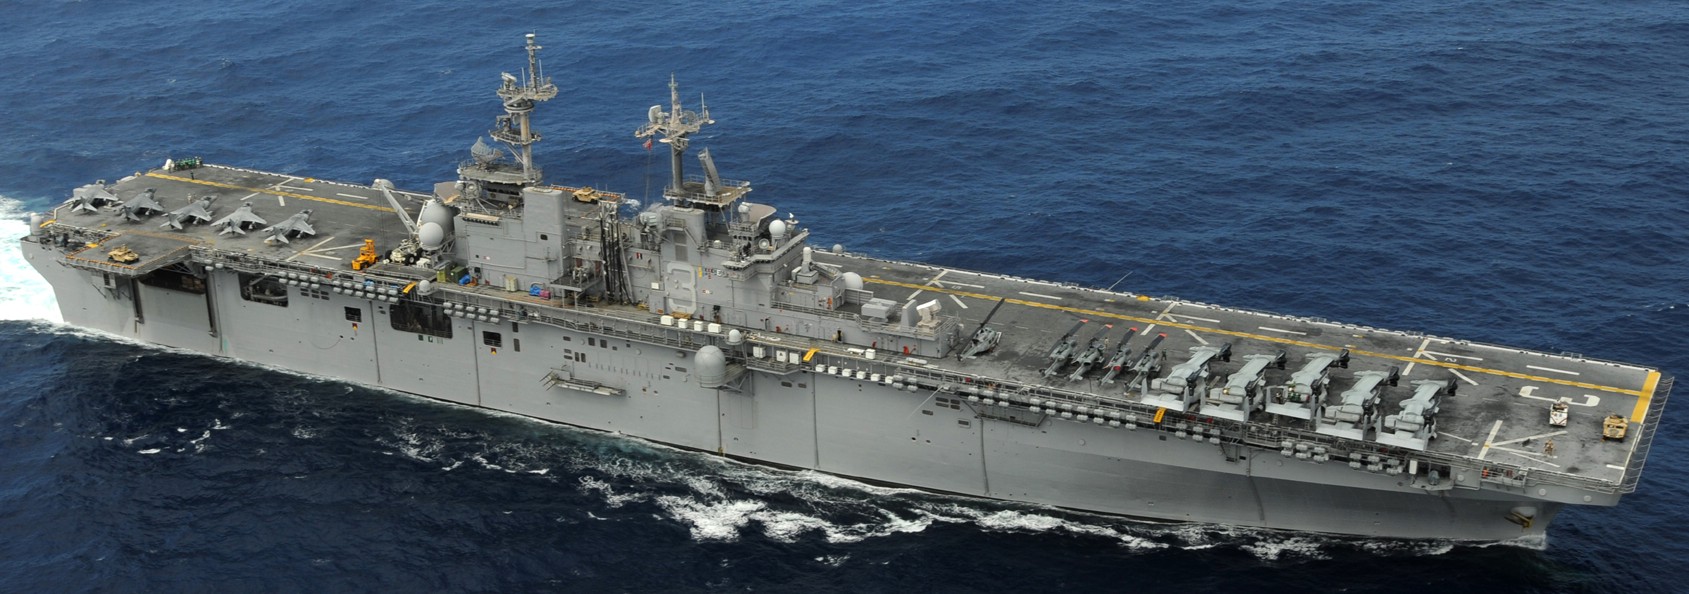 lhd-3 uss kearsarge wasp class amphibious assault ship us navy marines vmm-266 74